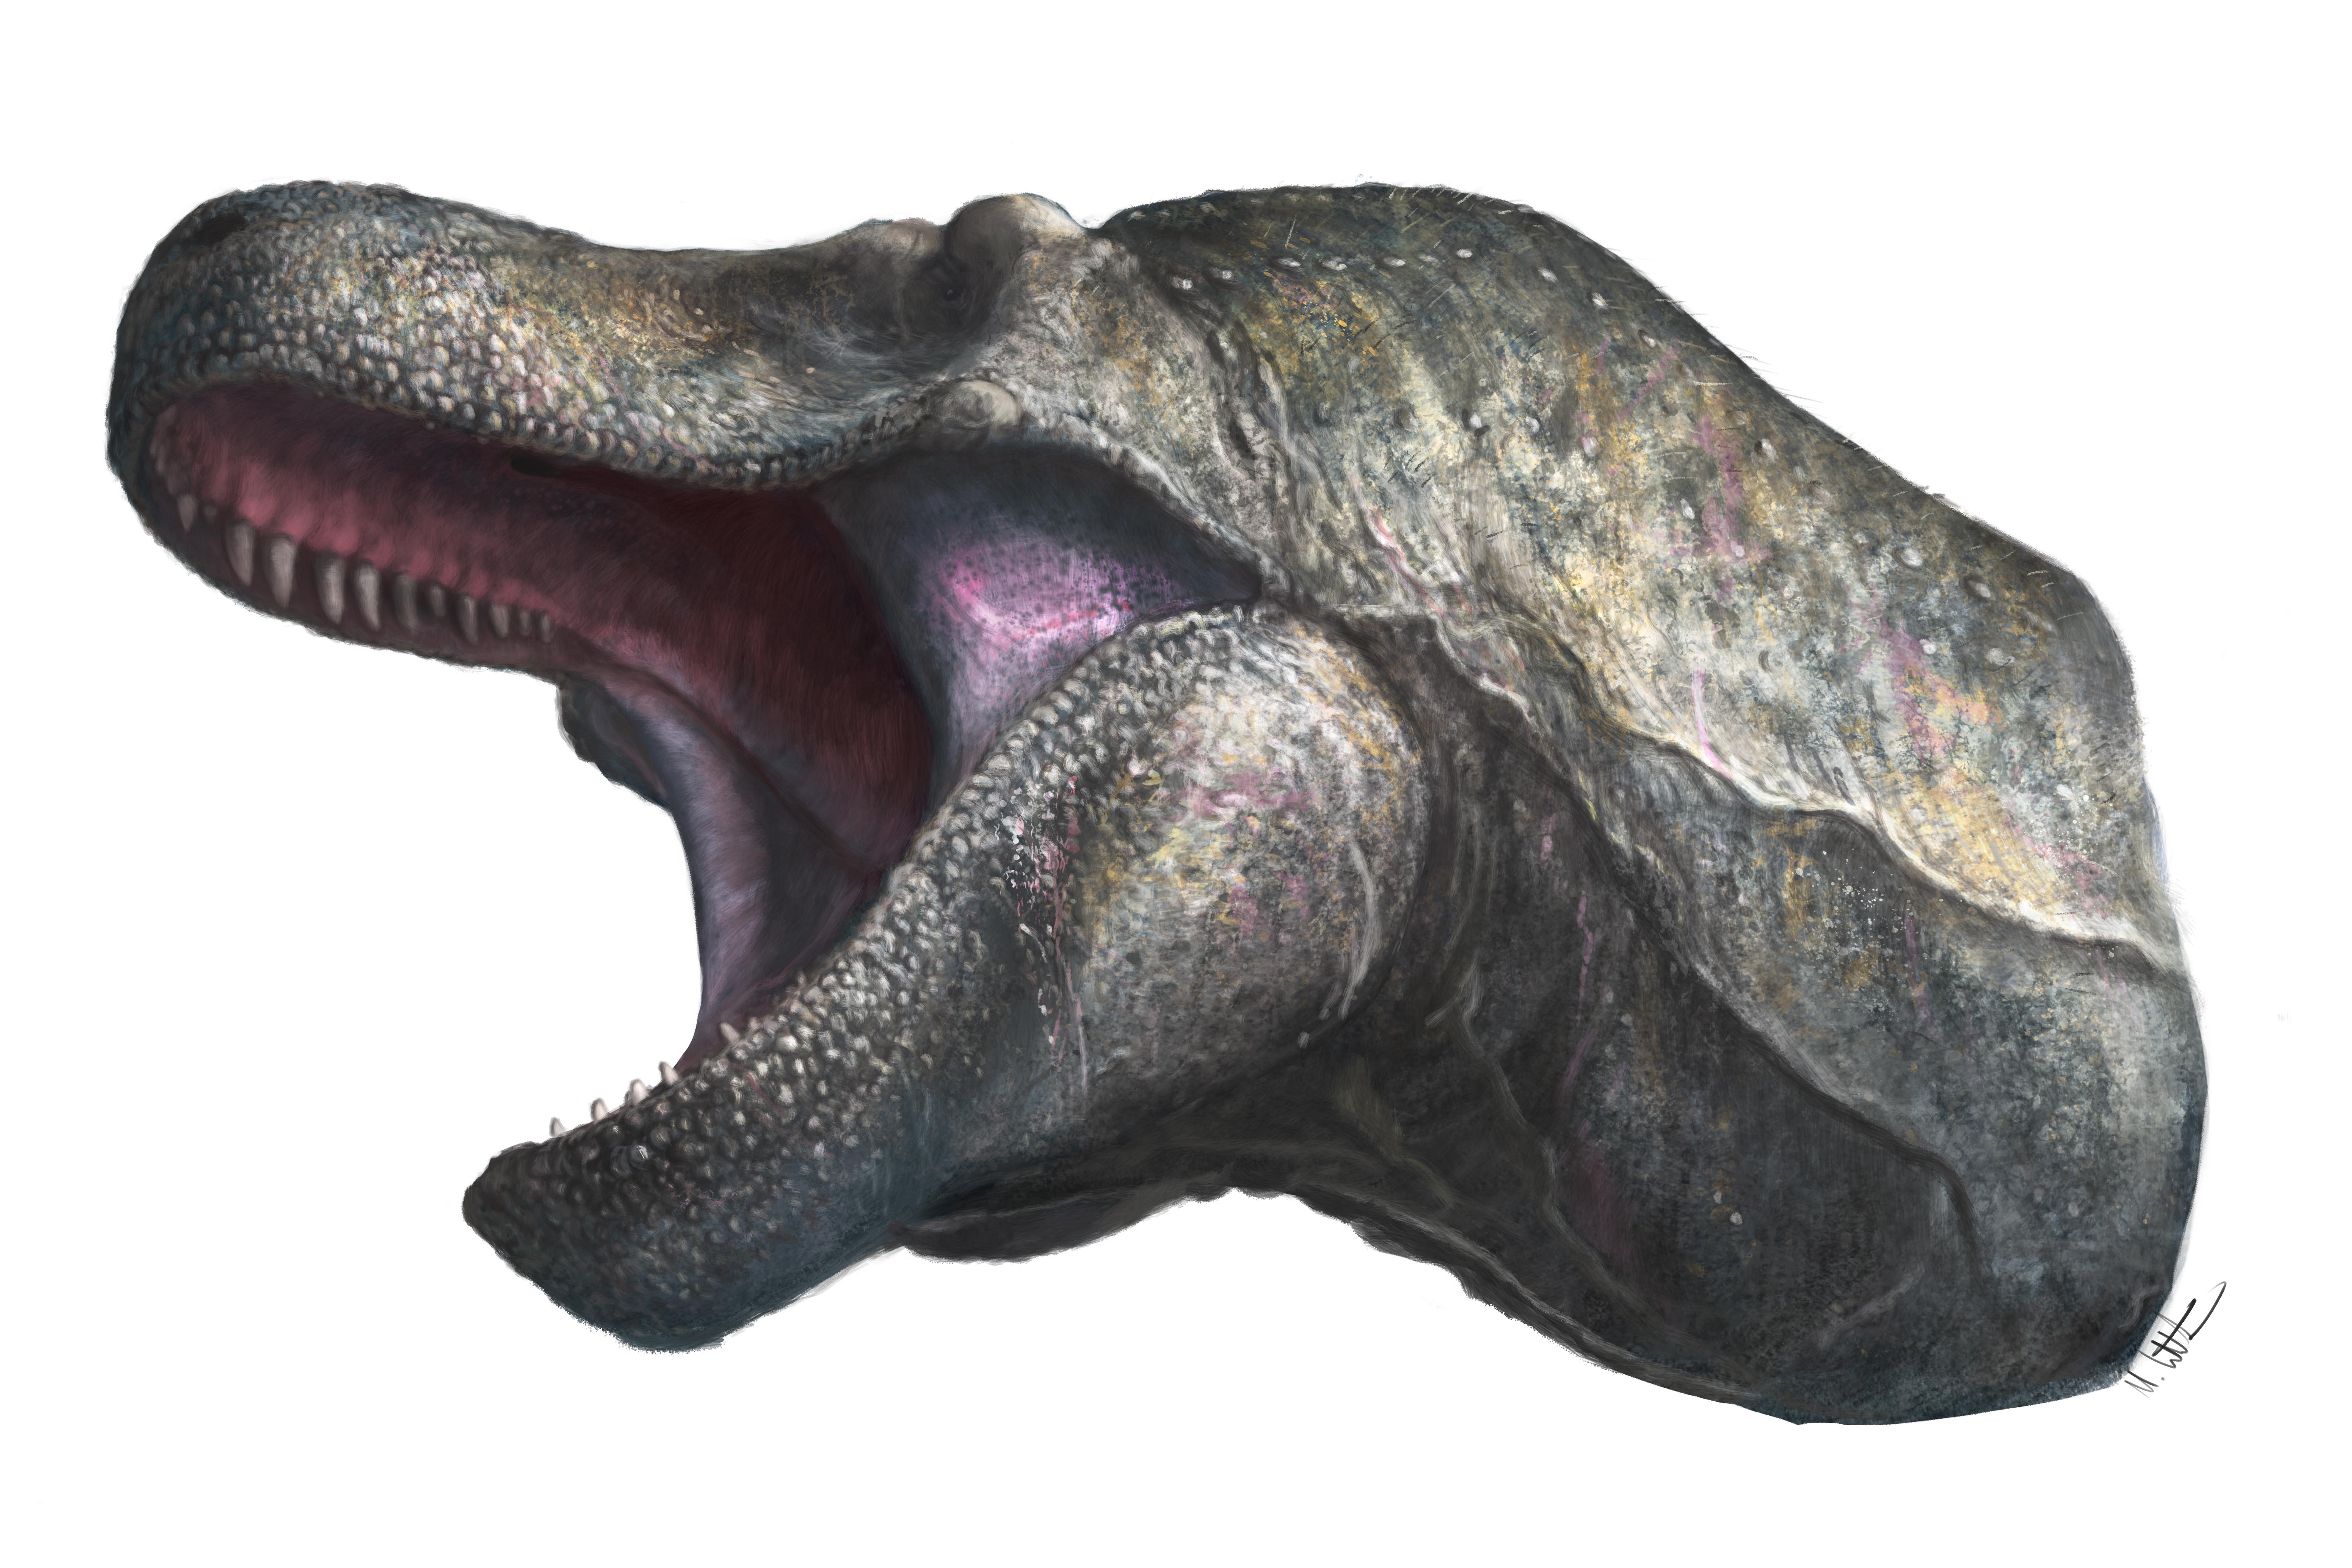 Predatory dinosaurs such as T. rex sported lizardlike lips